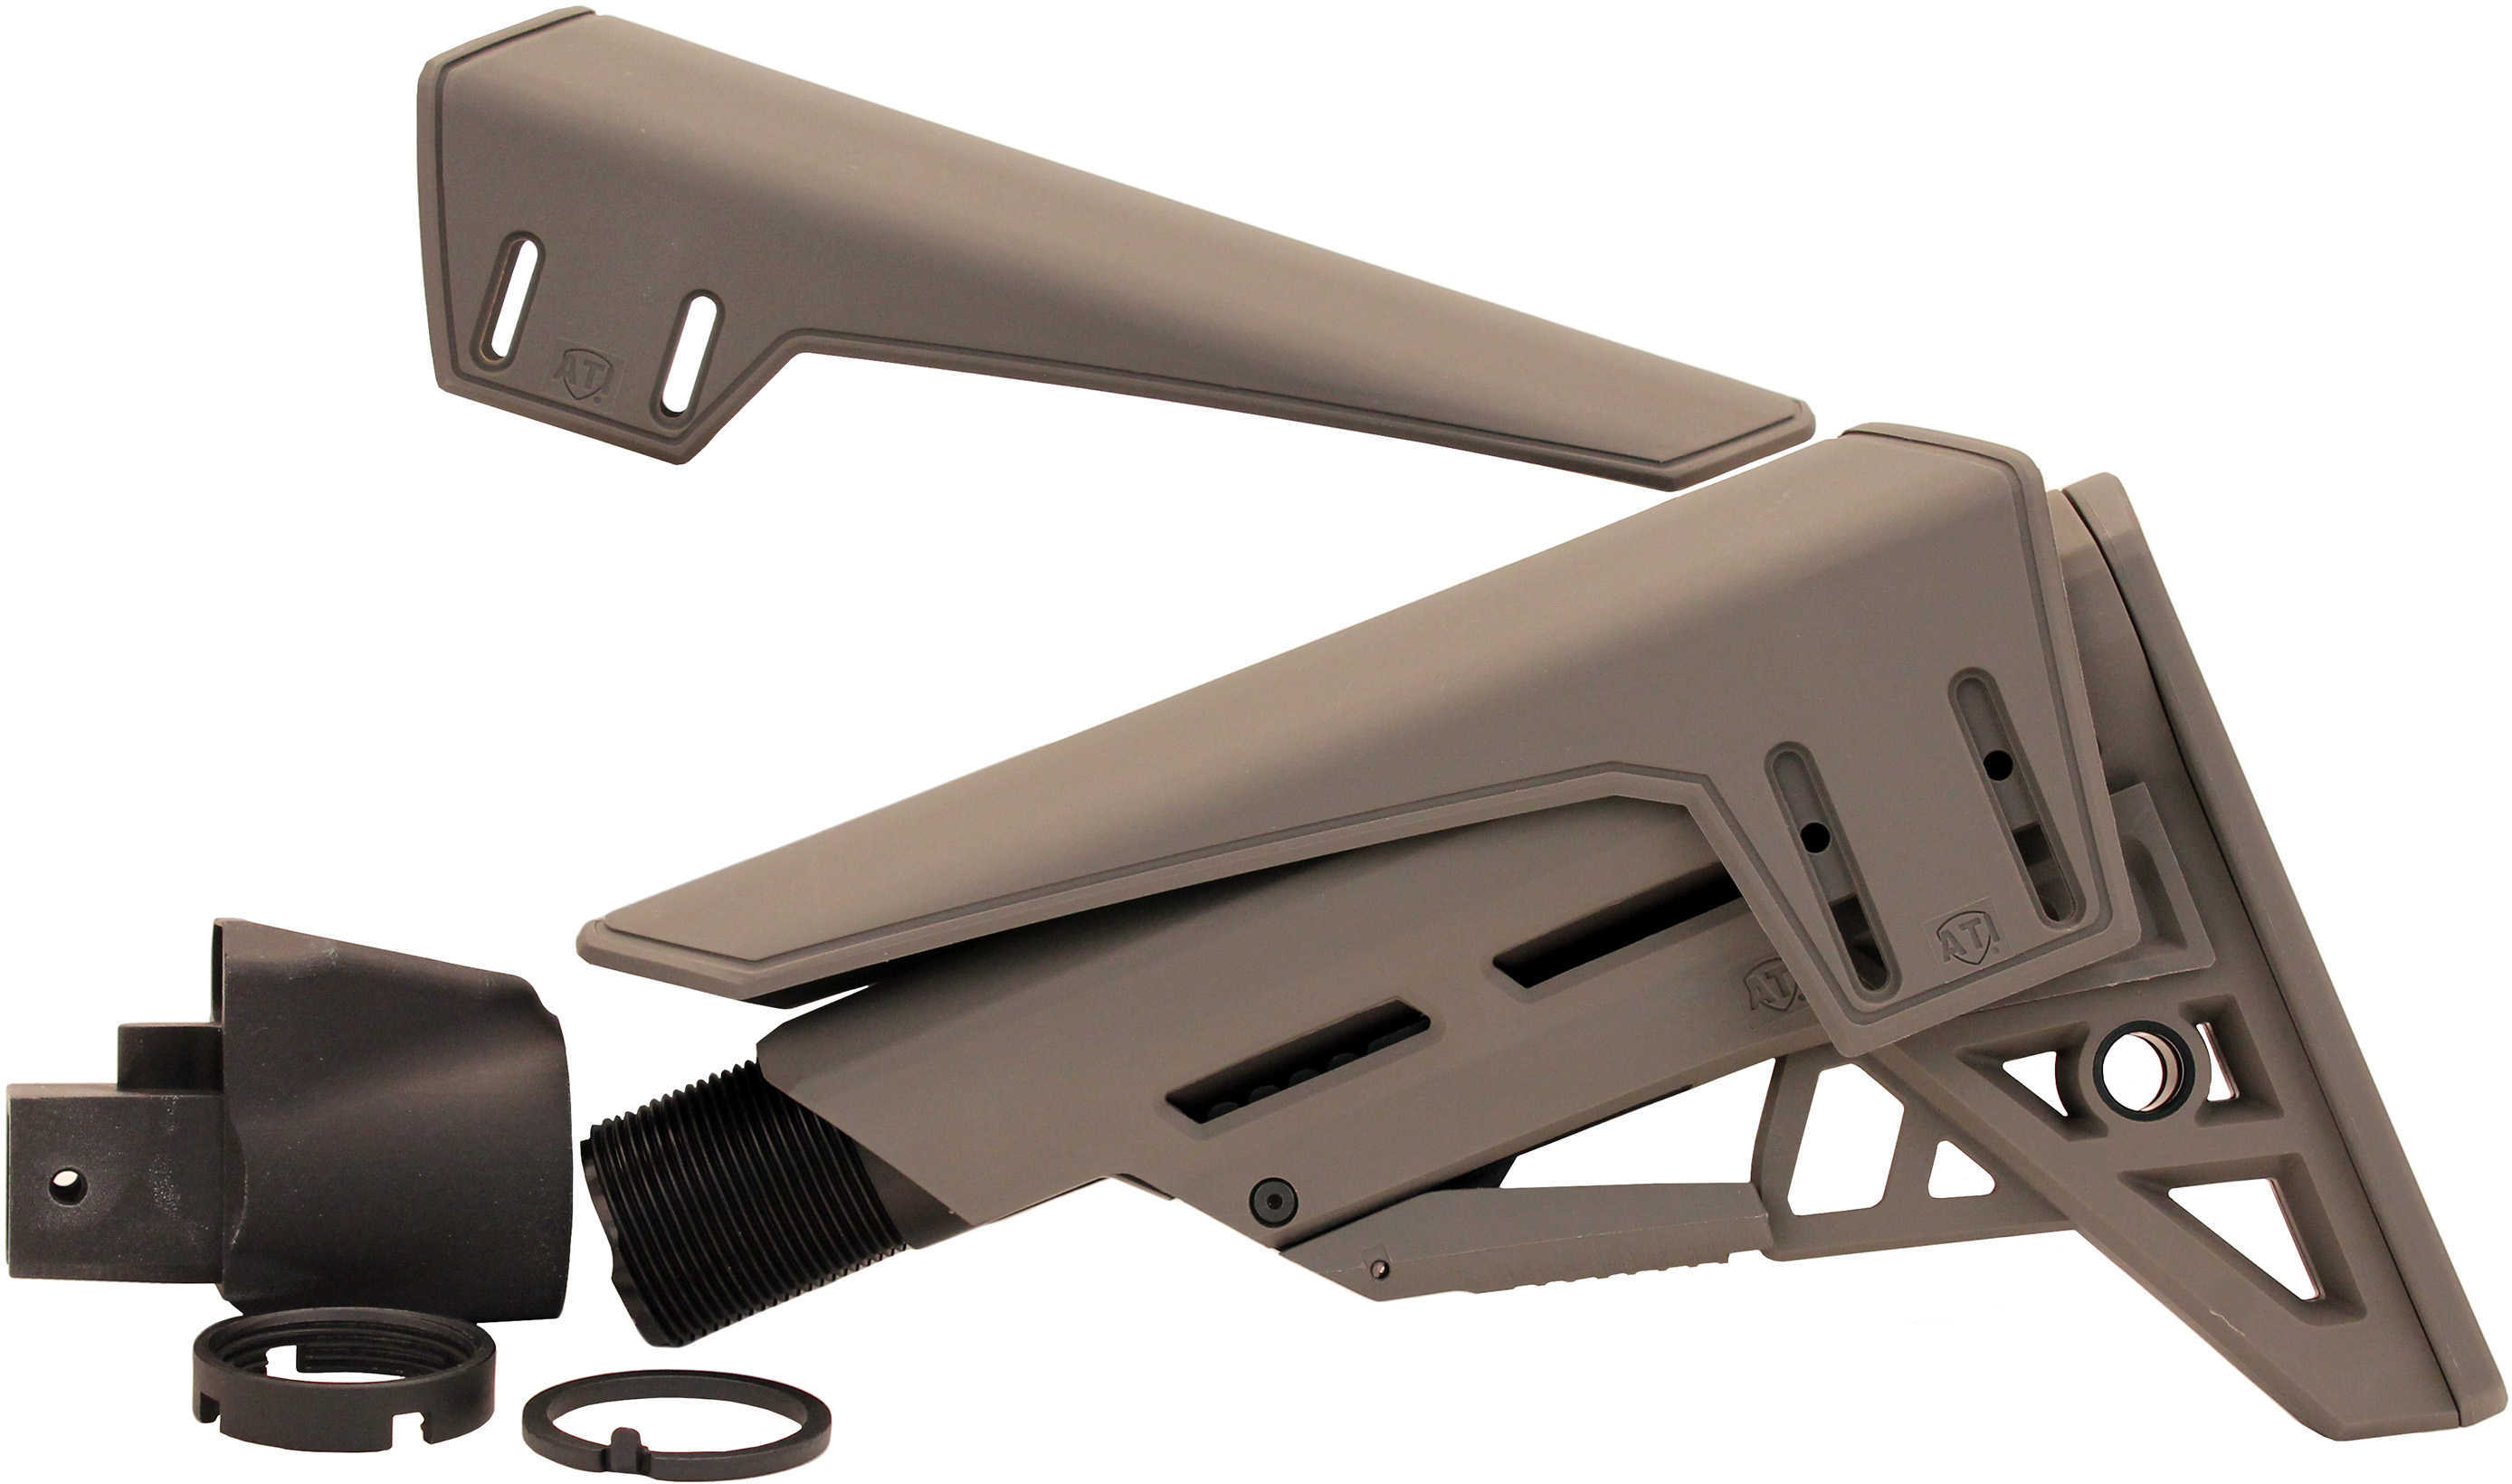 Advanced Technology Intl. ATI AK-47 TactLite Elite Adjustable Stock with Scorpion Pad Gray